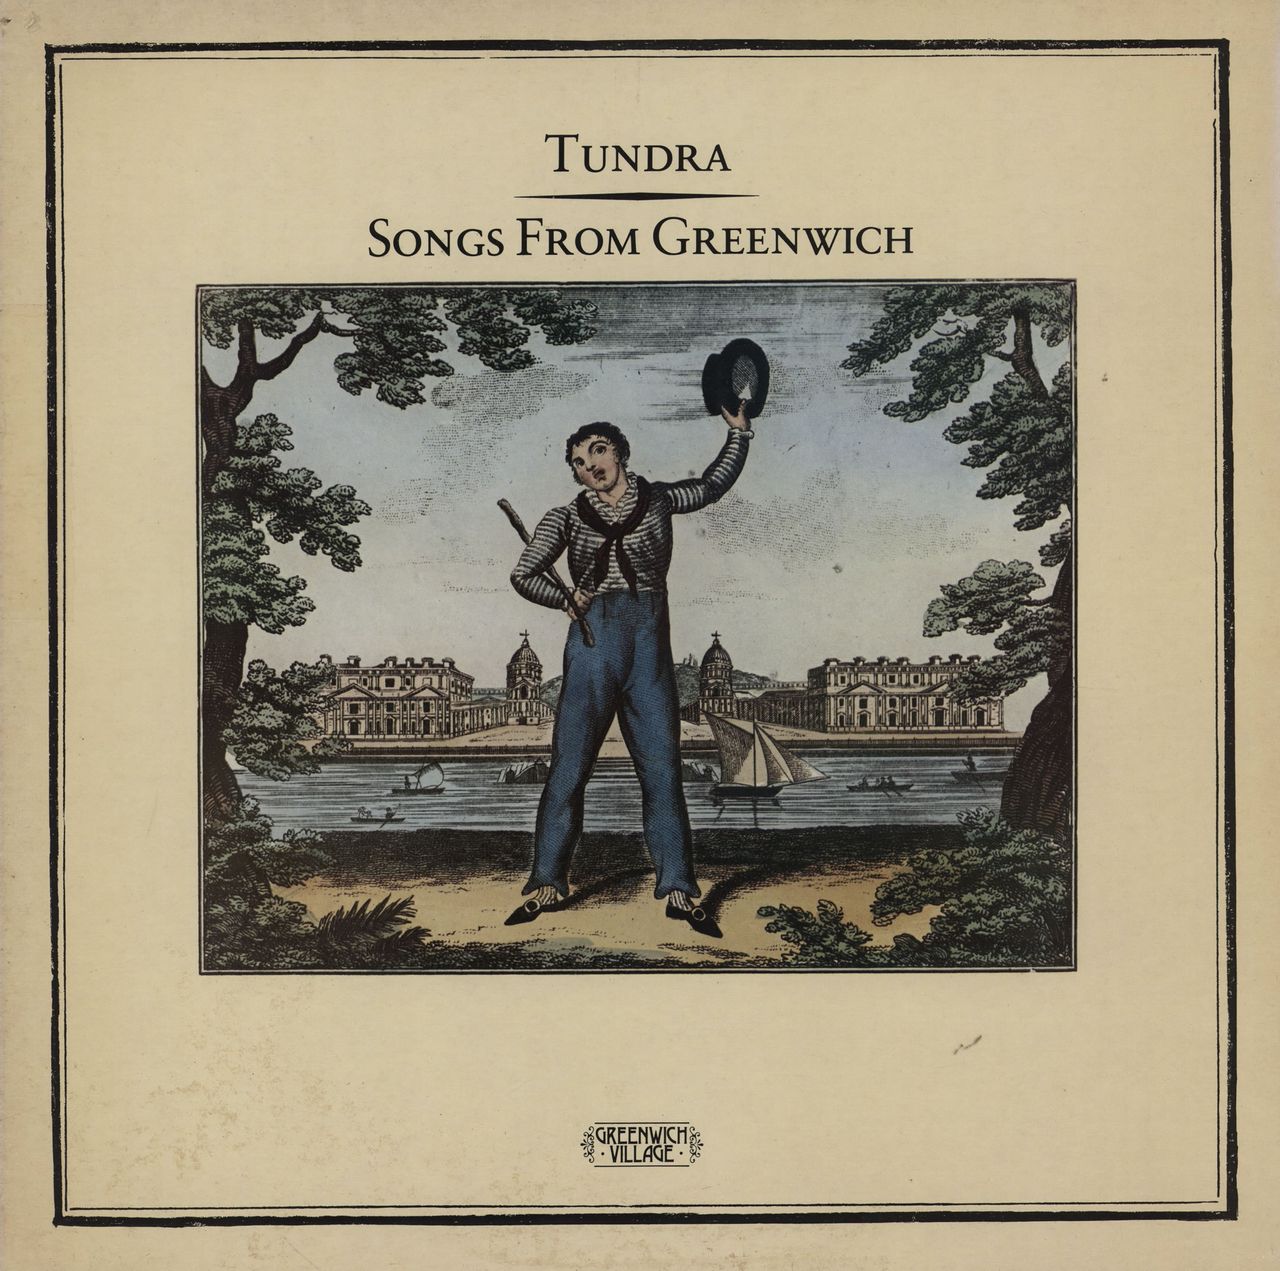 tundra-folk-songs-from-greenwich-uk-vinyl-lp-album-record-gvr218-760641_1280x1271.jpg